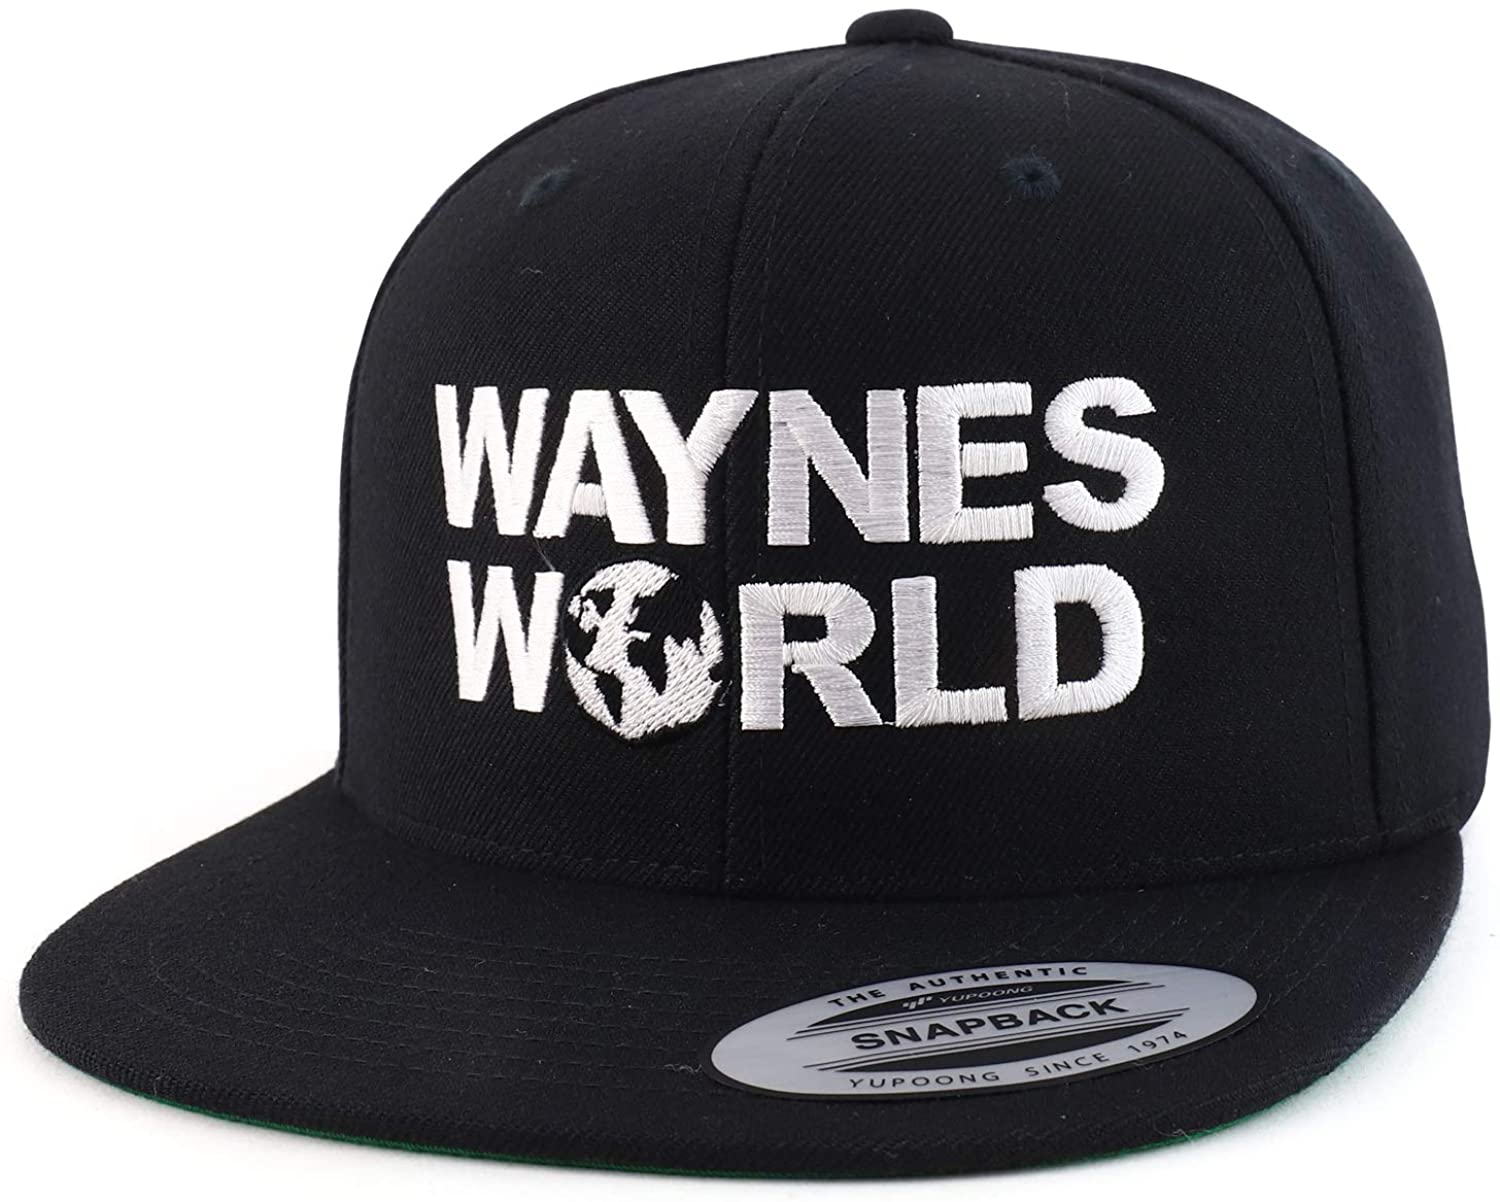 Wayne's World Snapback Hat